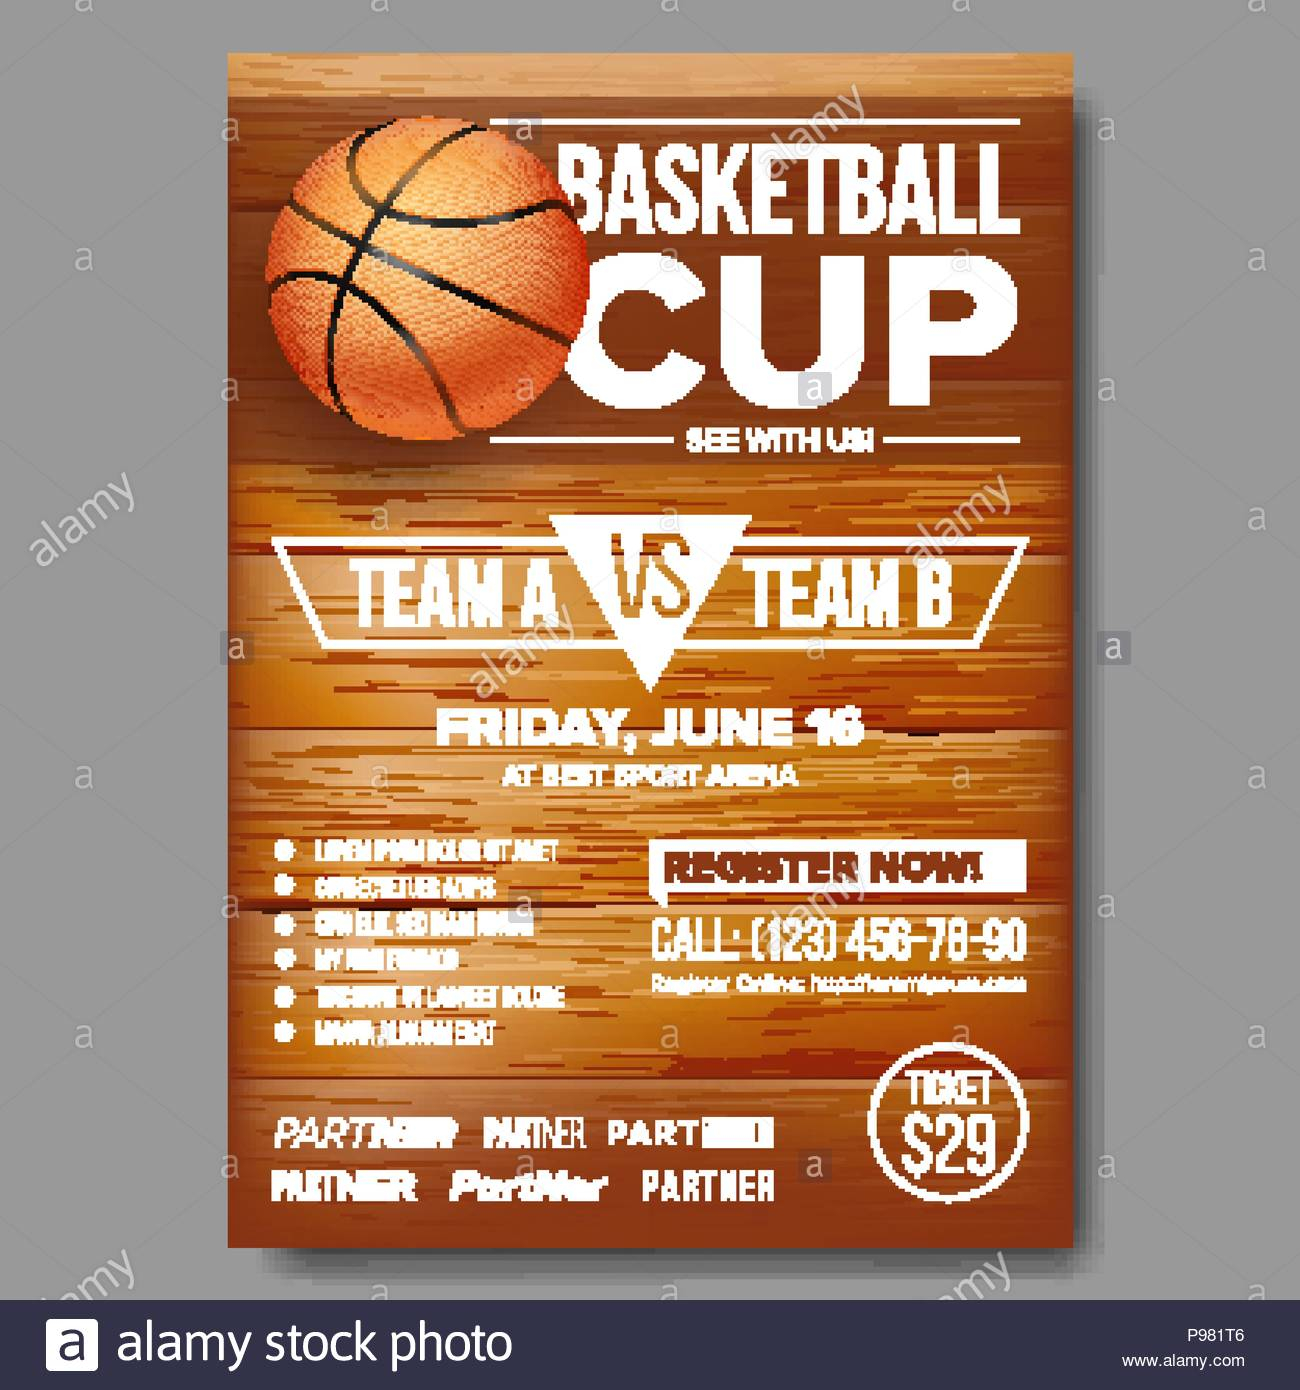 Basketball Poster Vektor. Basketball Ball Inside Basketball Game Flyer Template